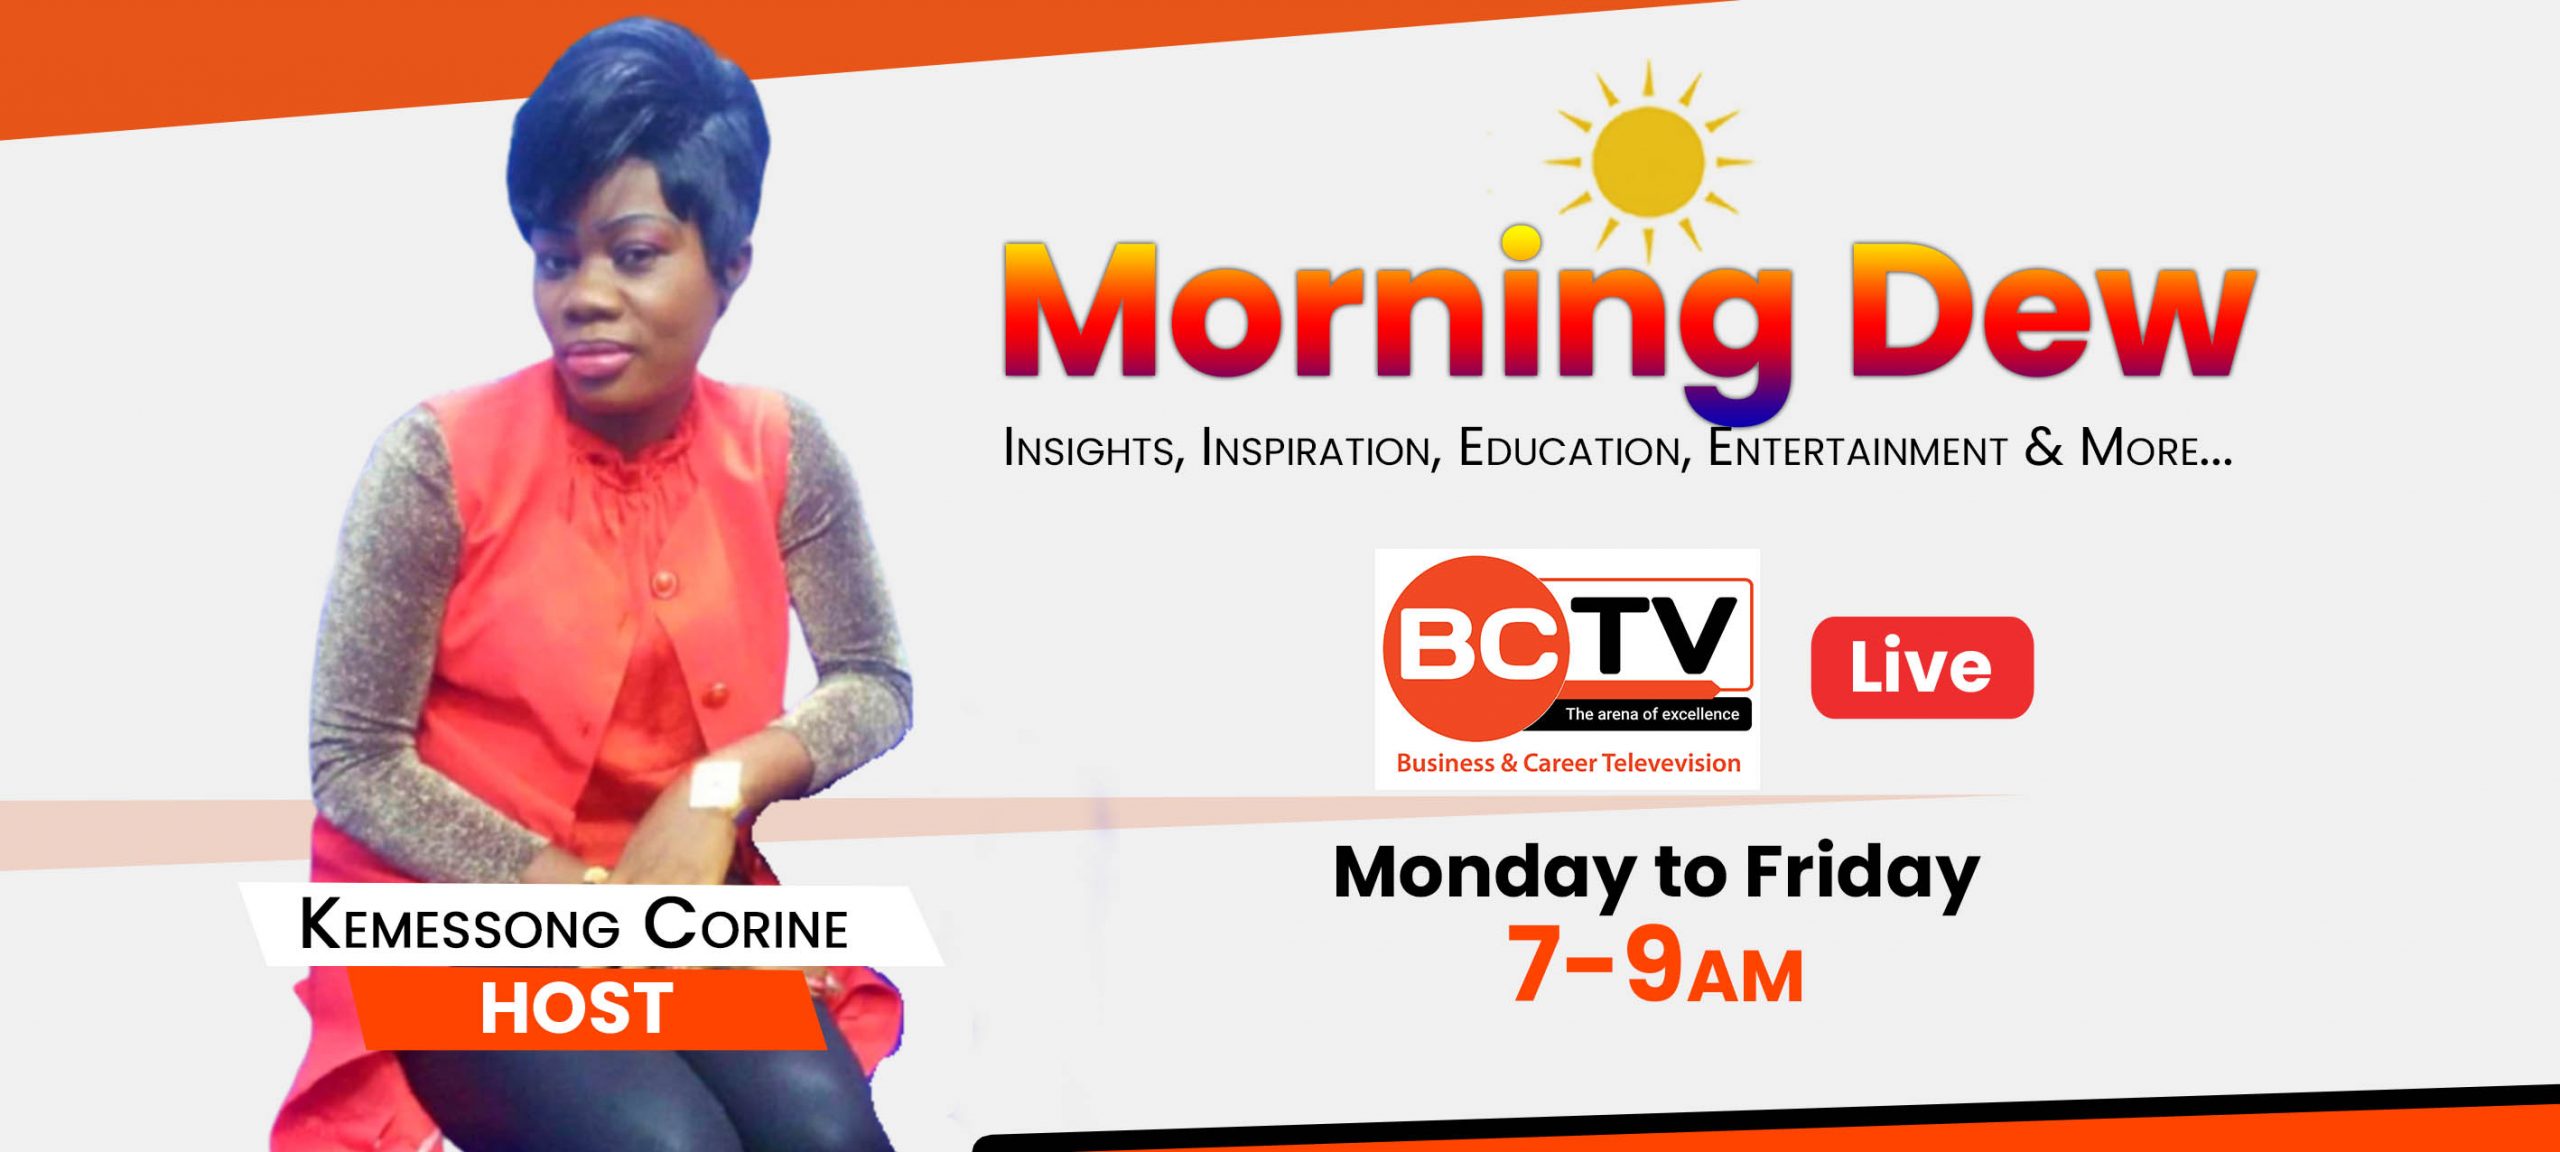 BCTV program - Morning Dew